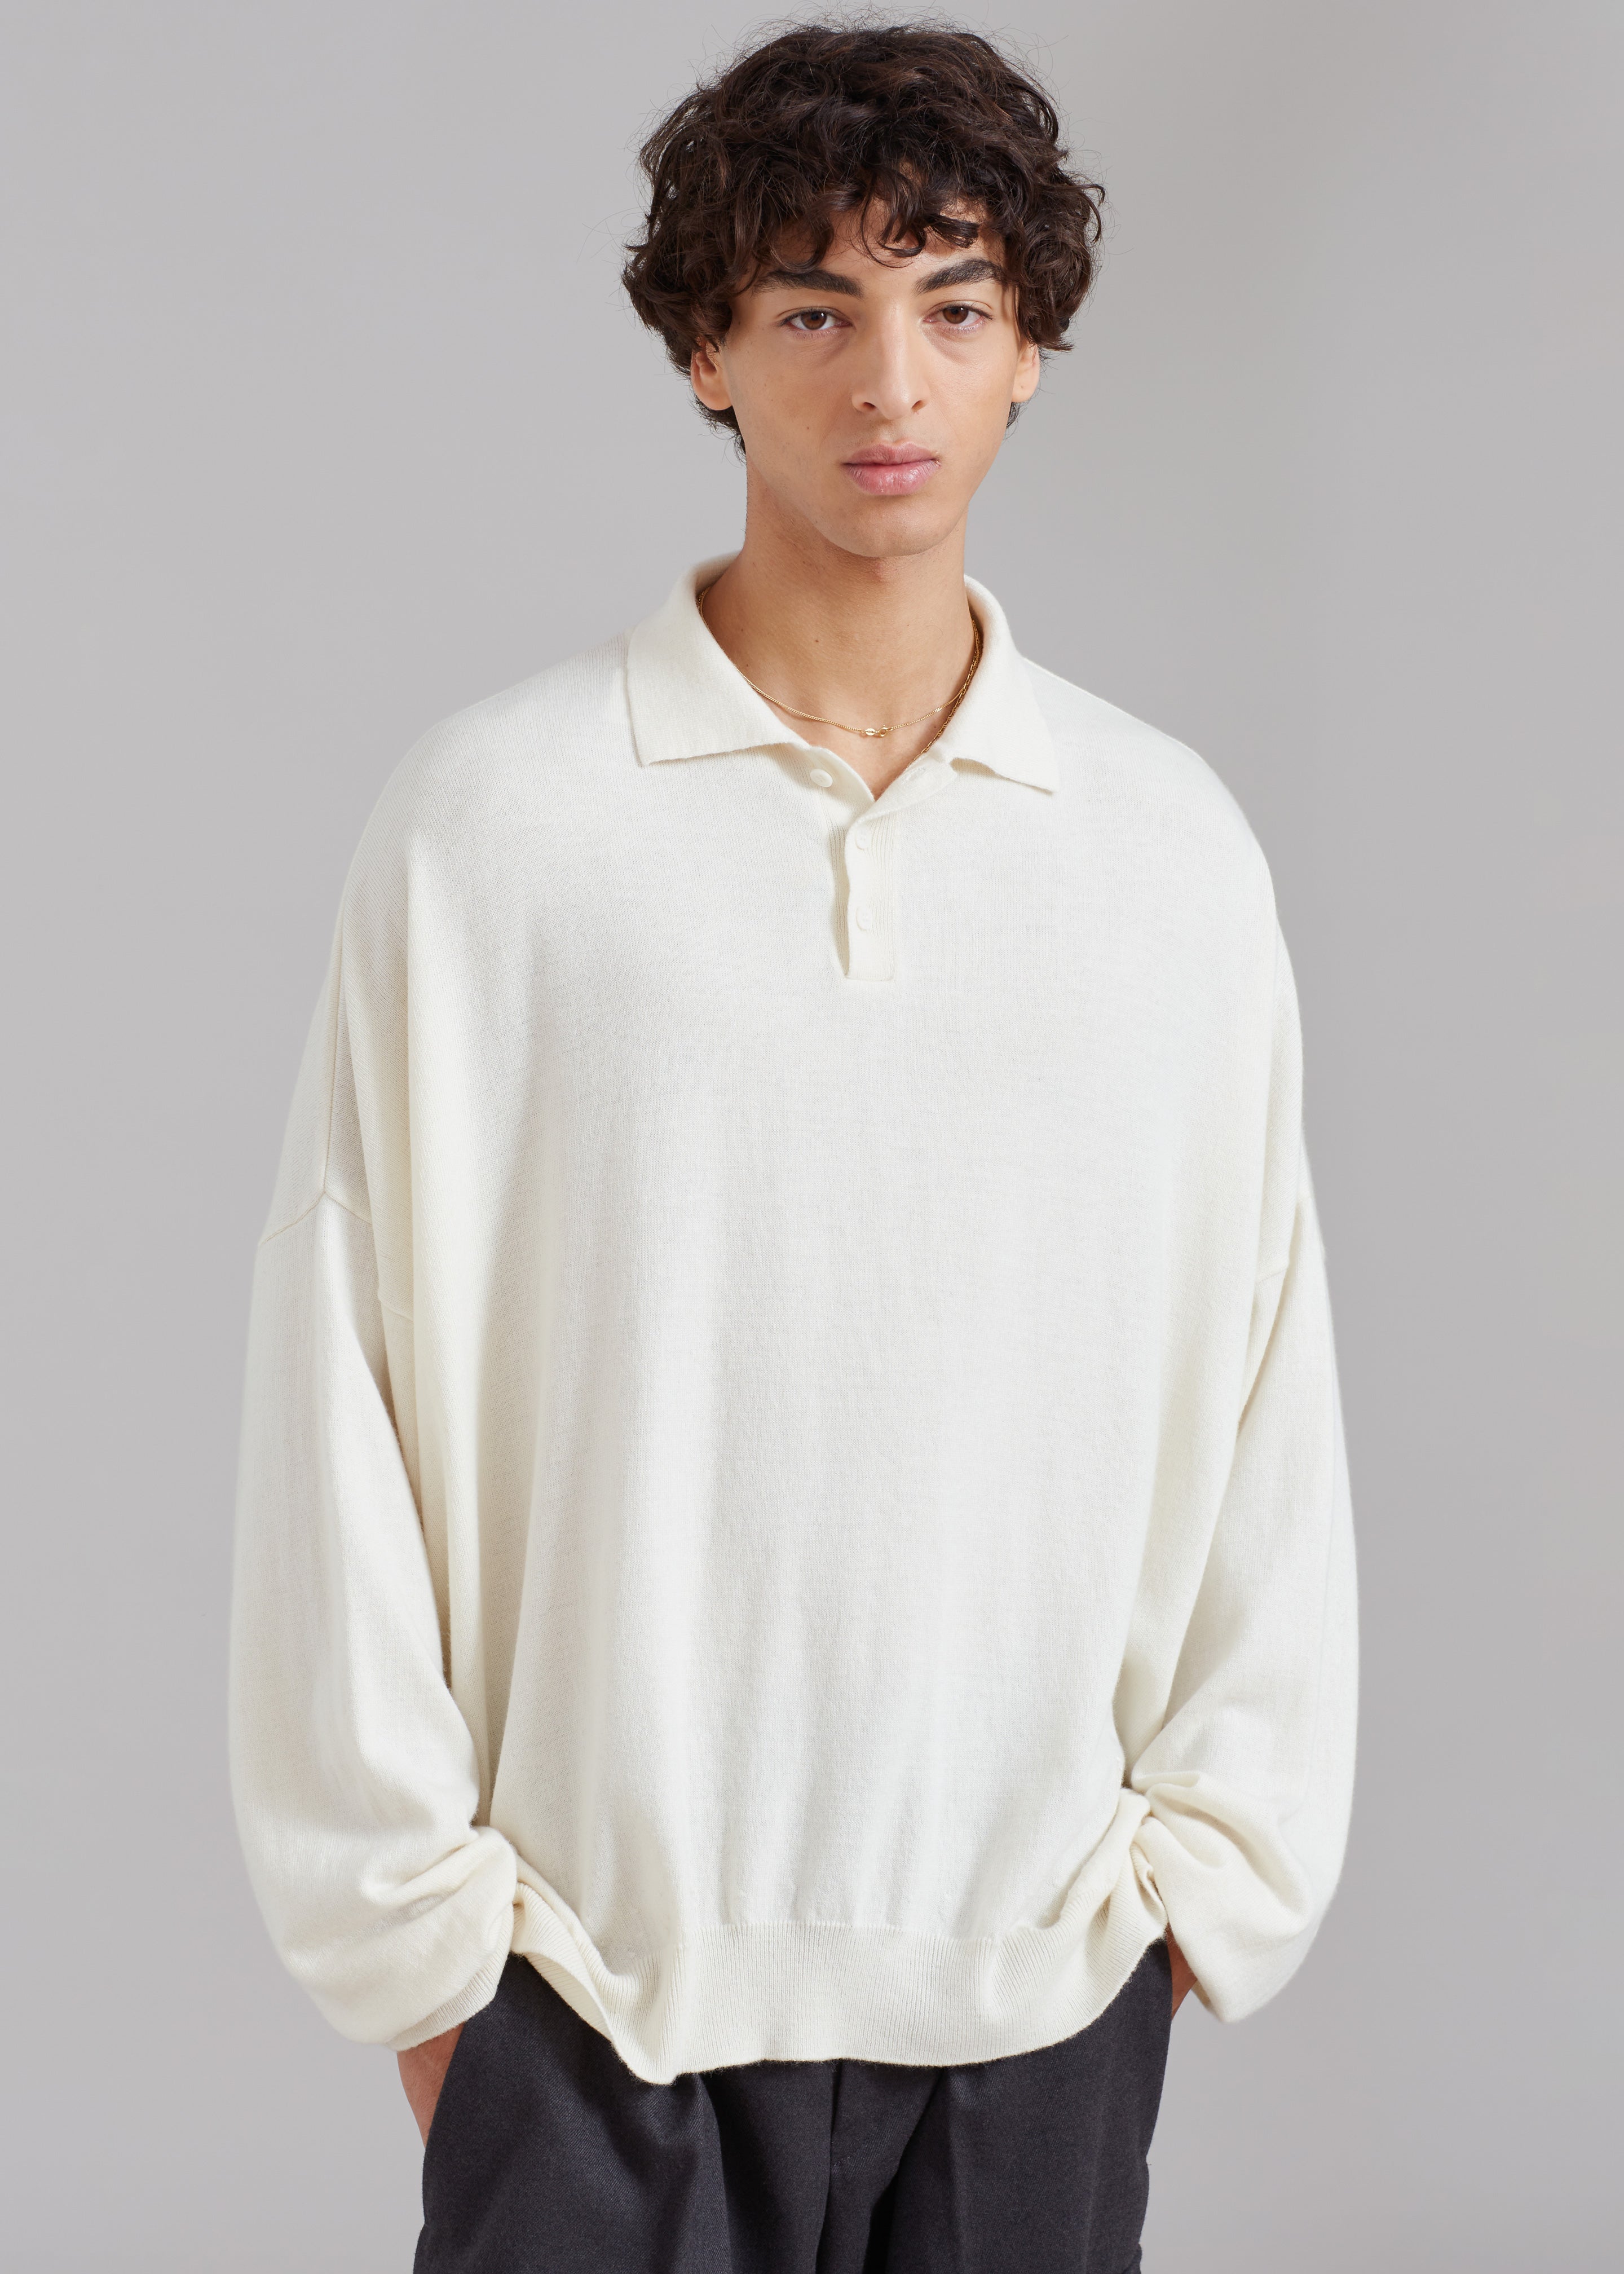 Meriel Polo Sweater - Cream - 6 - Meriel Polo Sweater - Cream [gender-male]